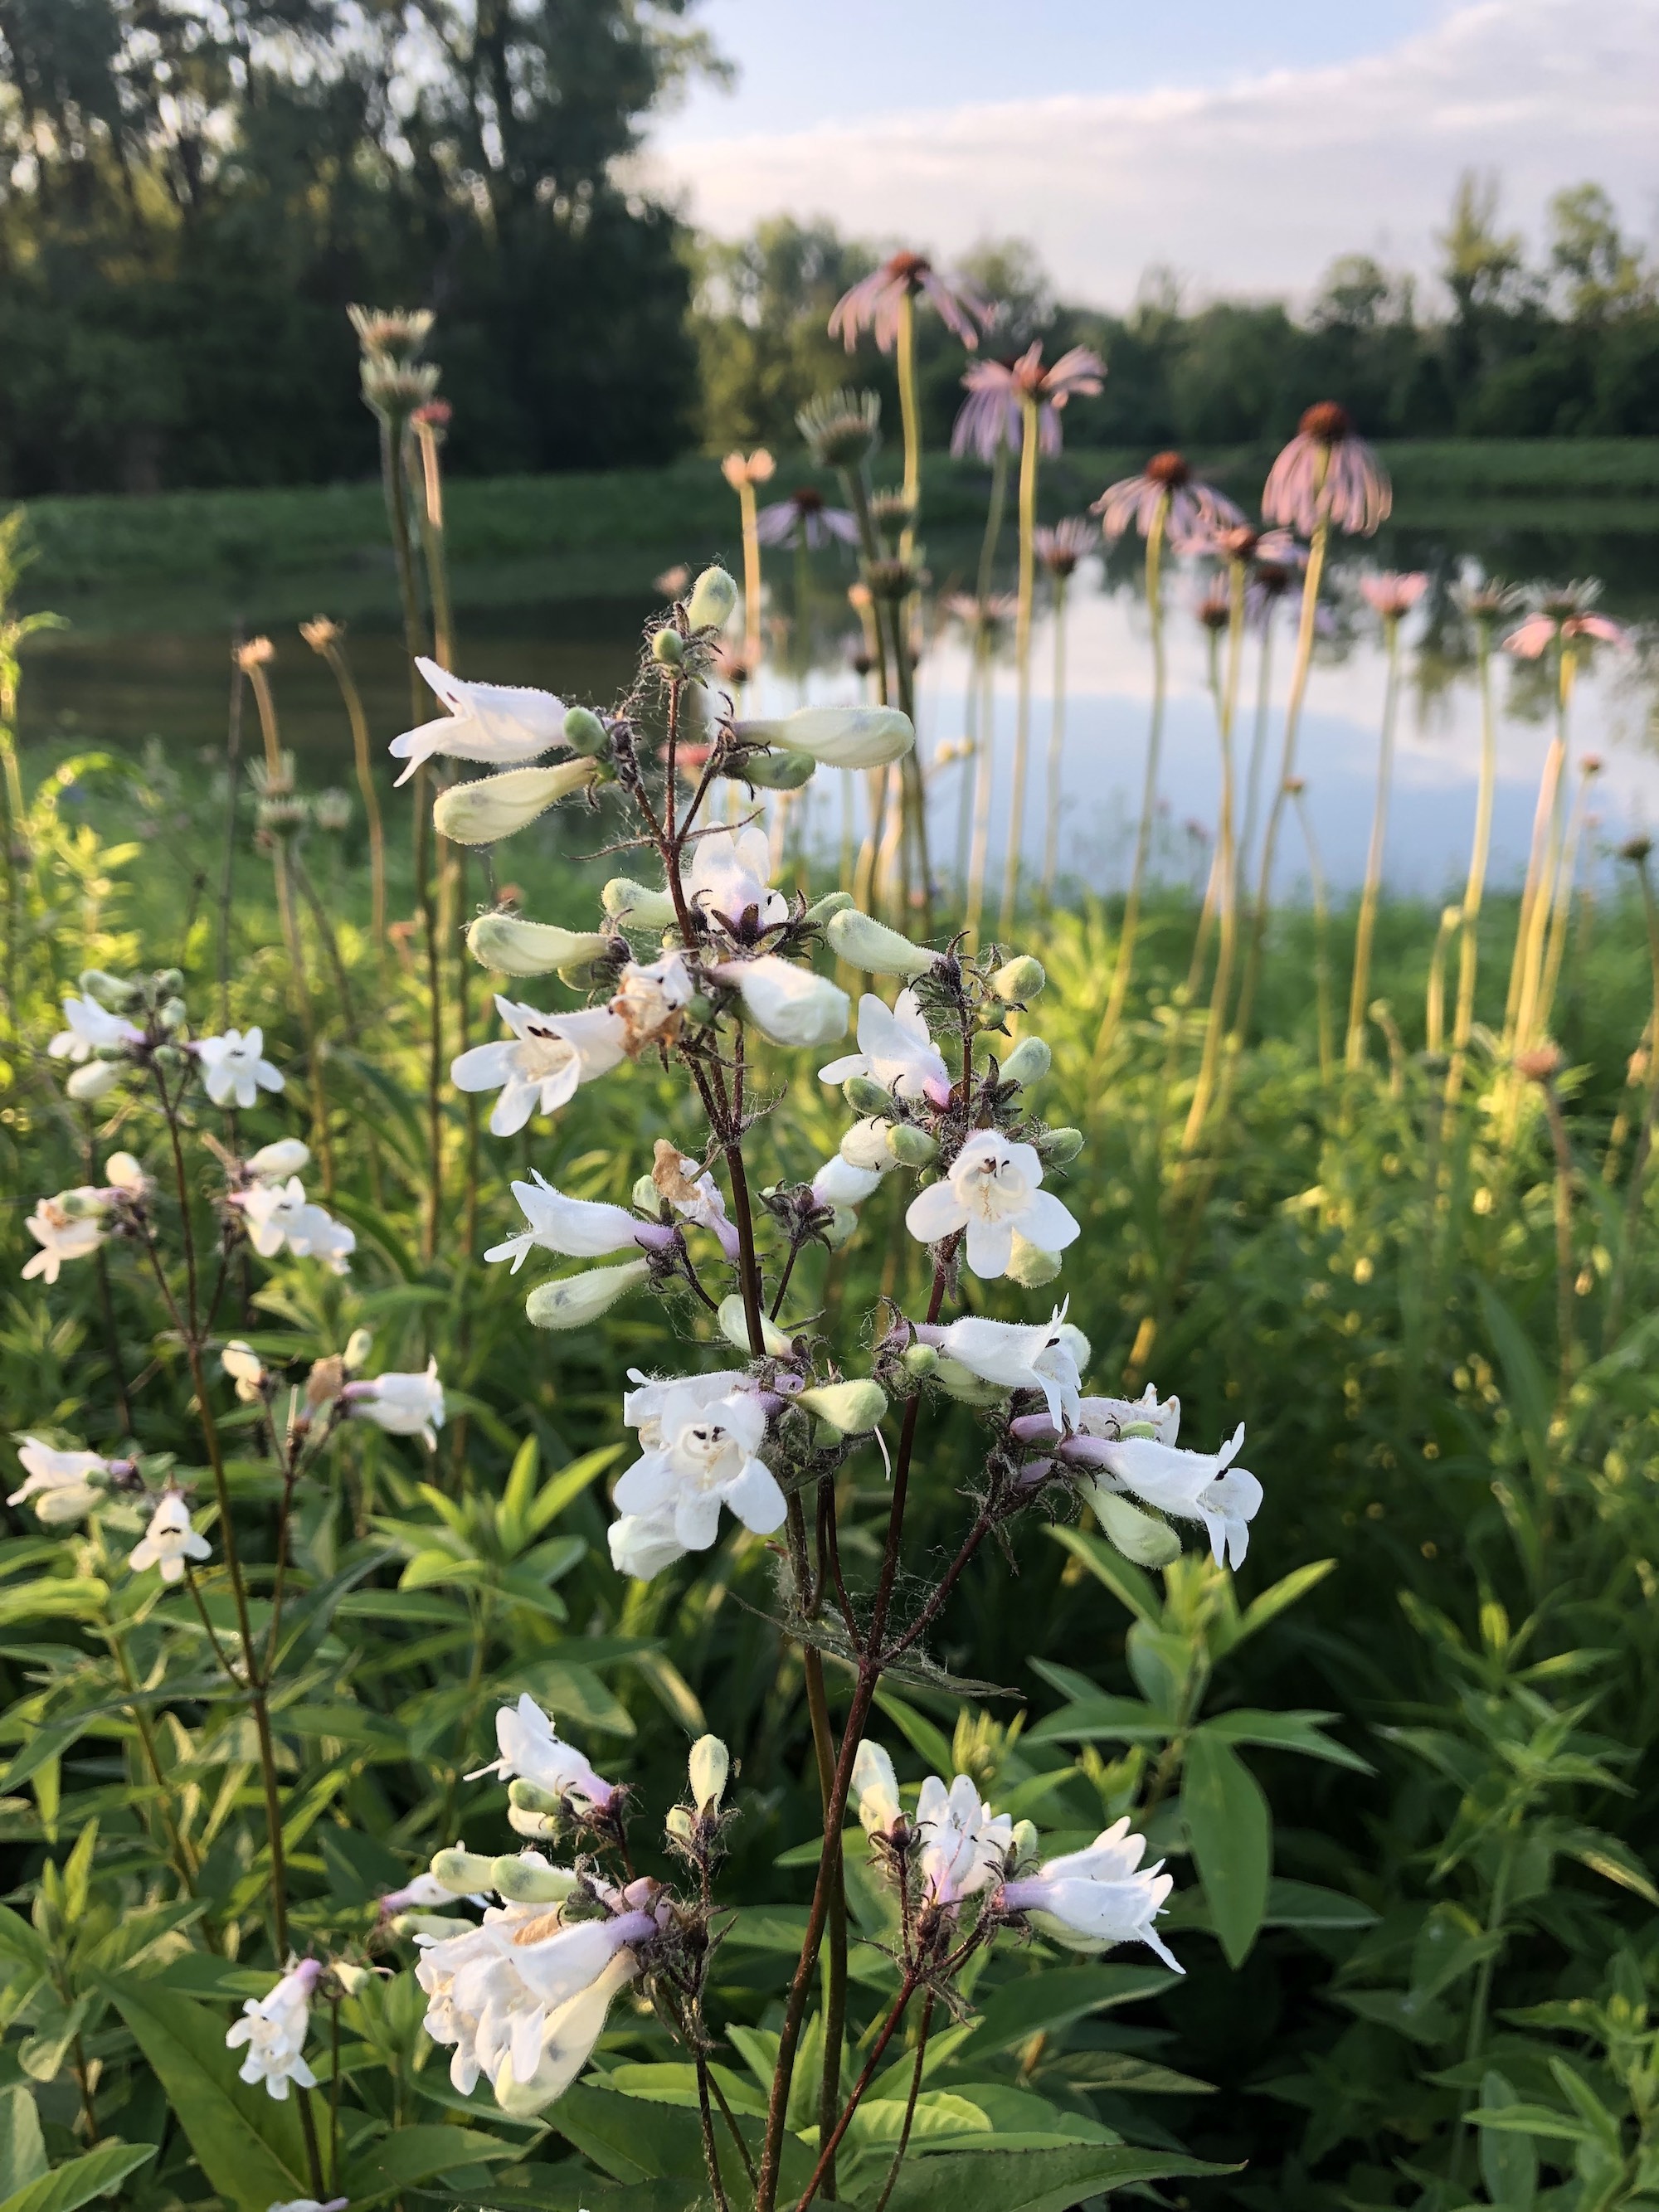 Foxglove Beardtongue on bank of retaining pond in Madison, Wisconsin on June 8, 2021.